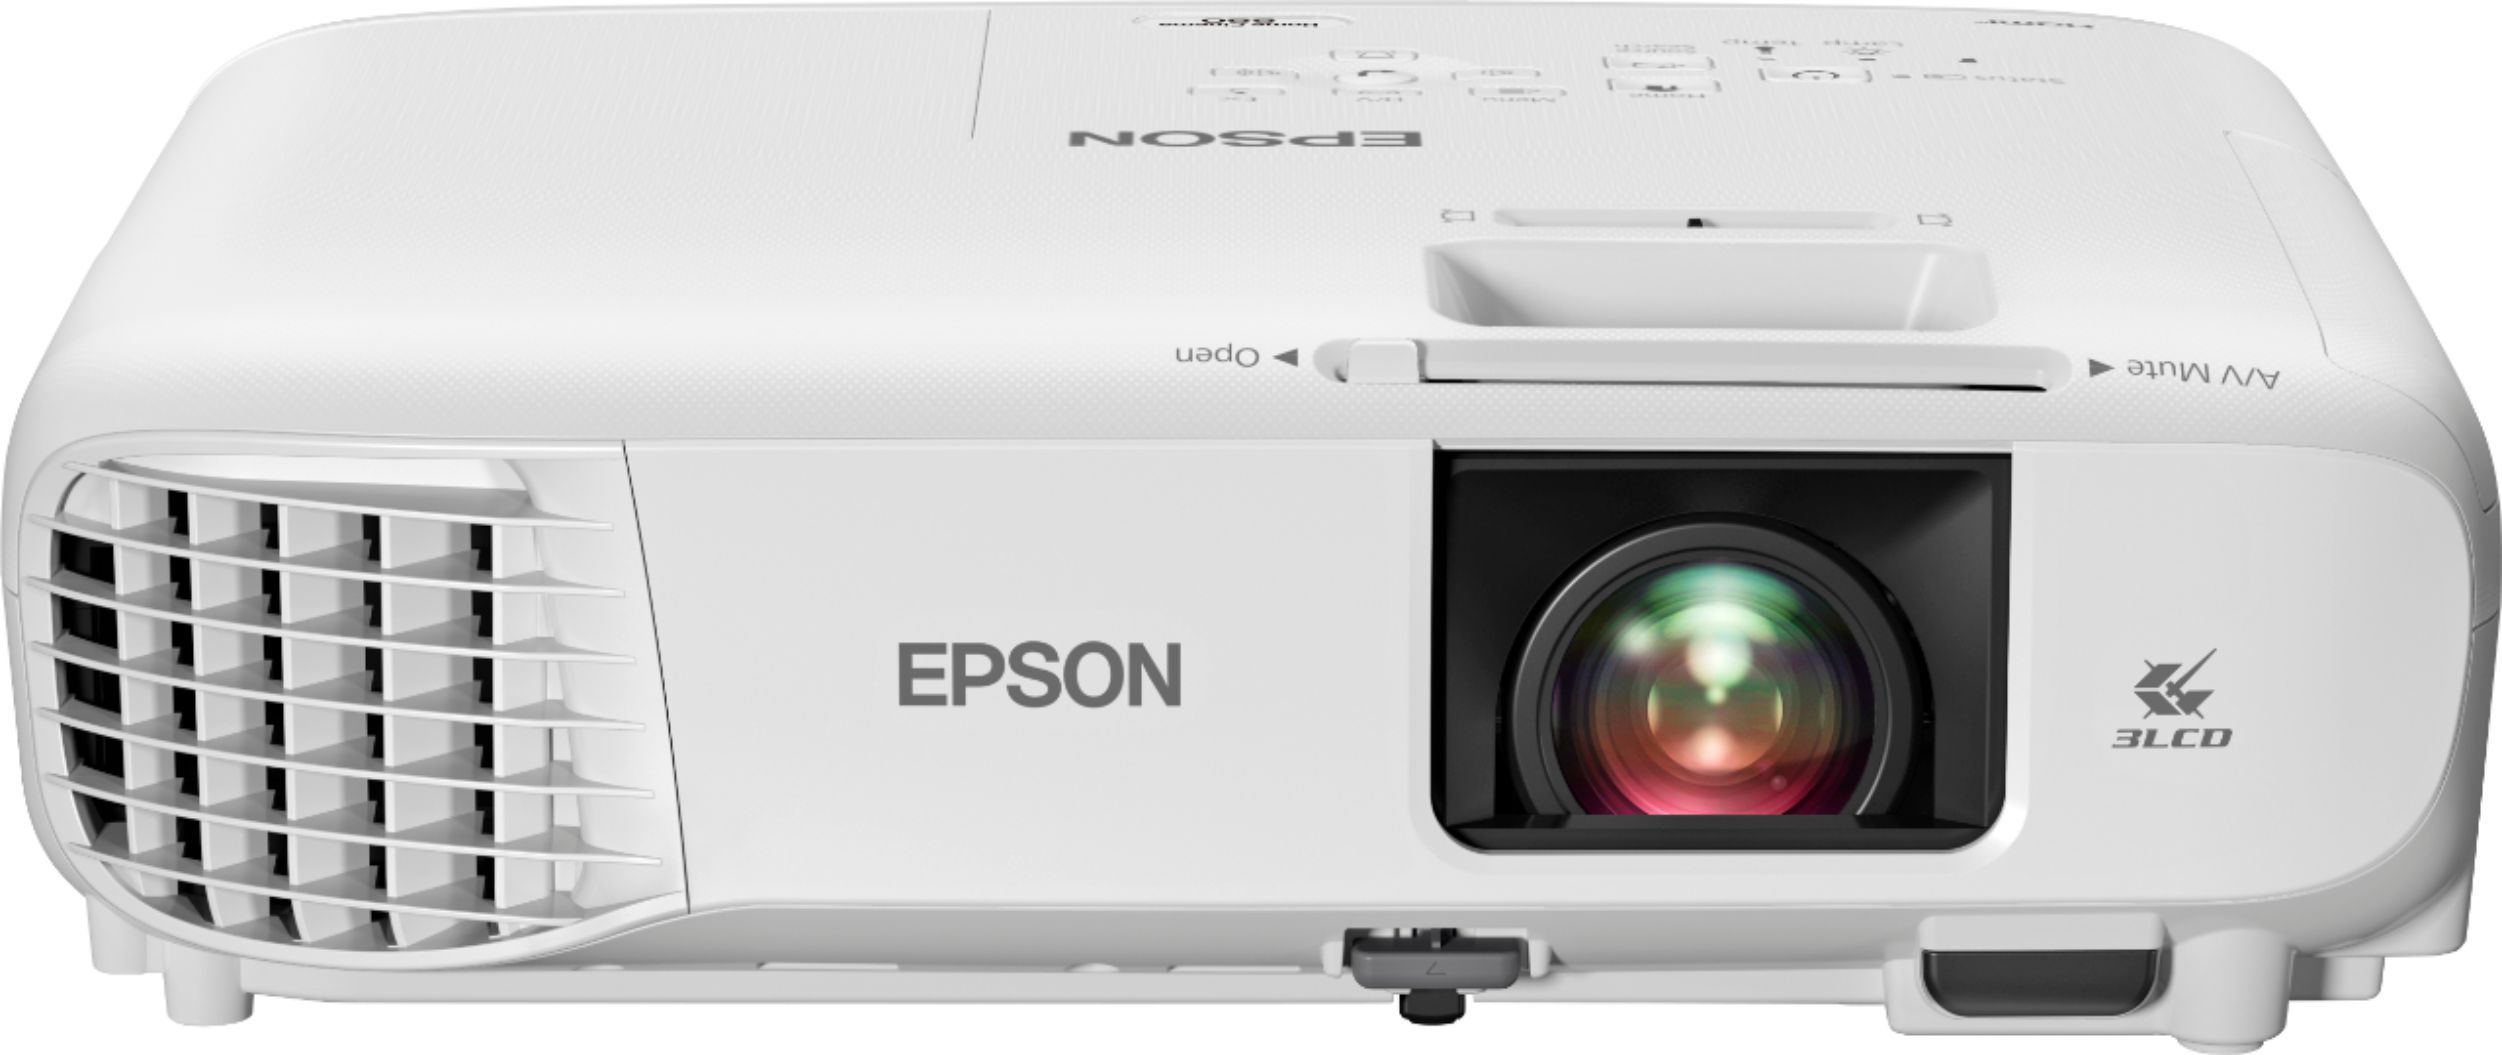 Epson Home Cinema 880 1080p 3LCD Projector, 3300 lumens White V11H979020 - Best Buy | Best Buy U.S.